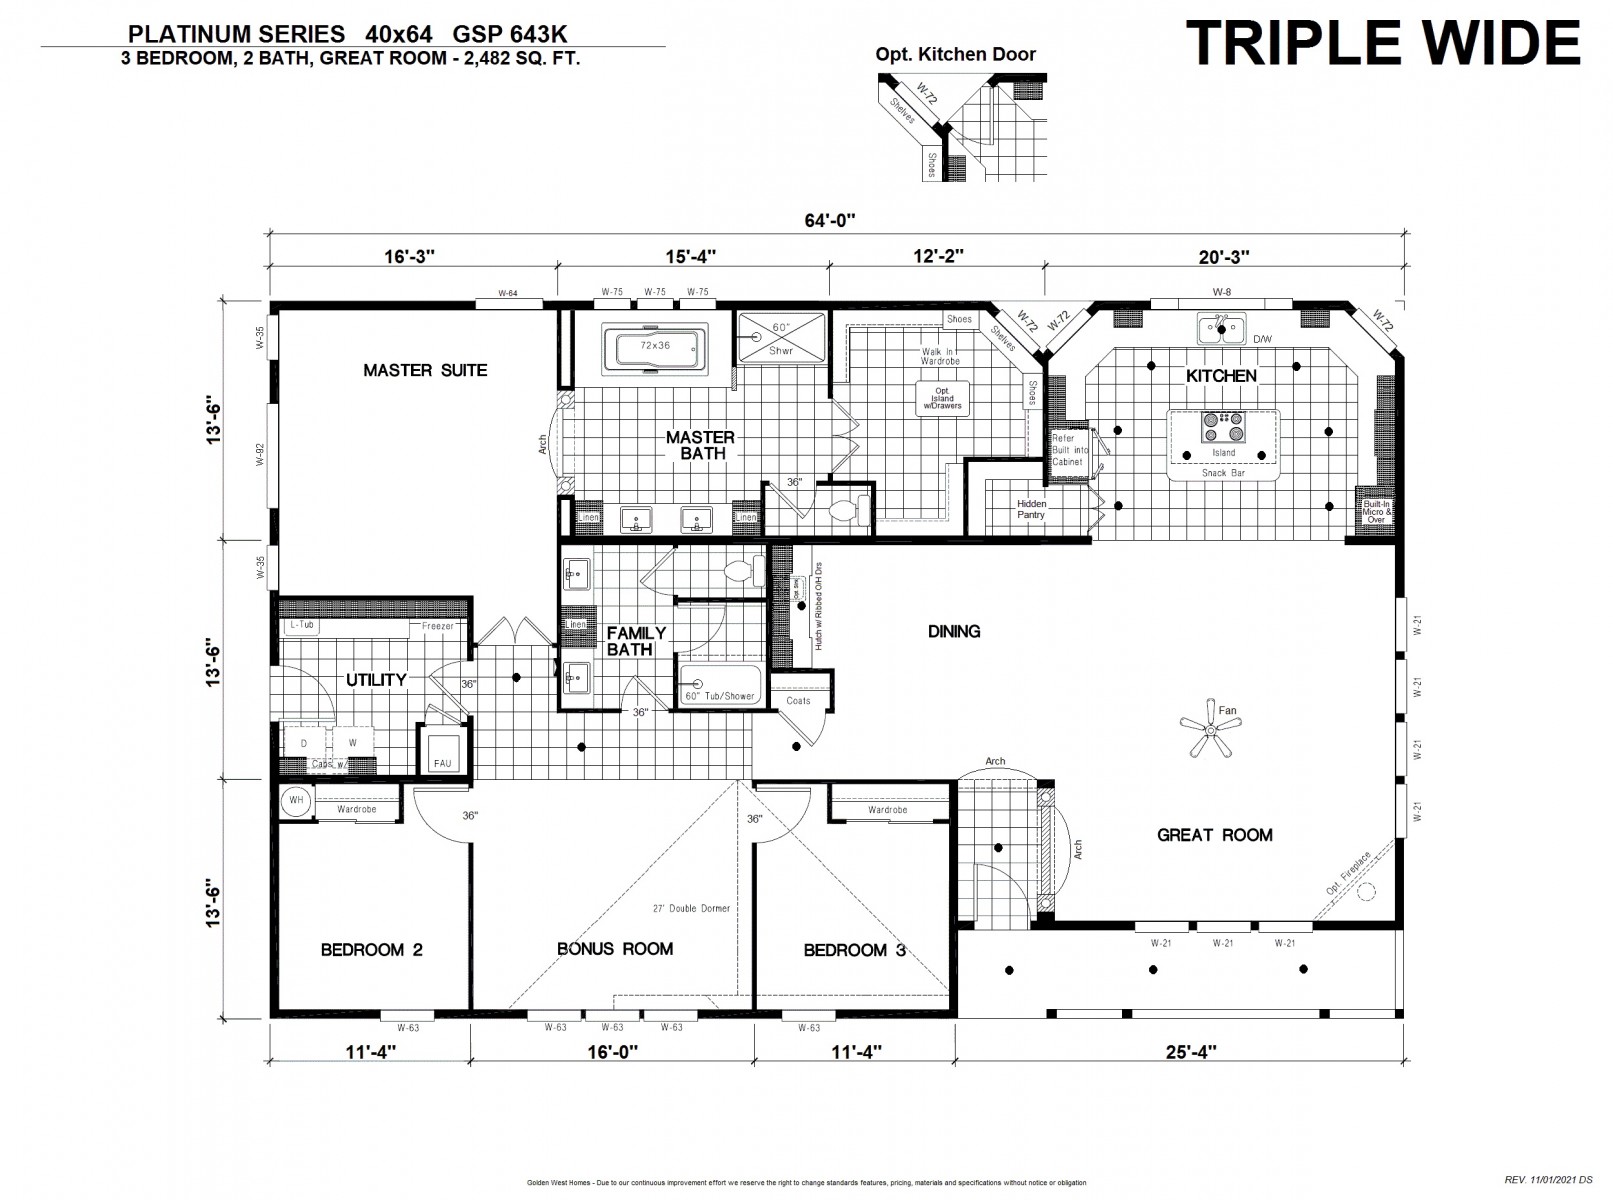 Homes Direct Modular Homes - Model GSP643K - Floorplan